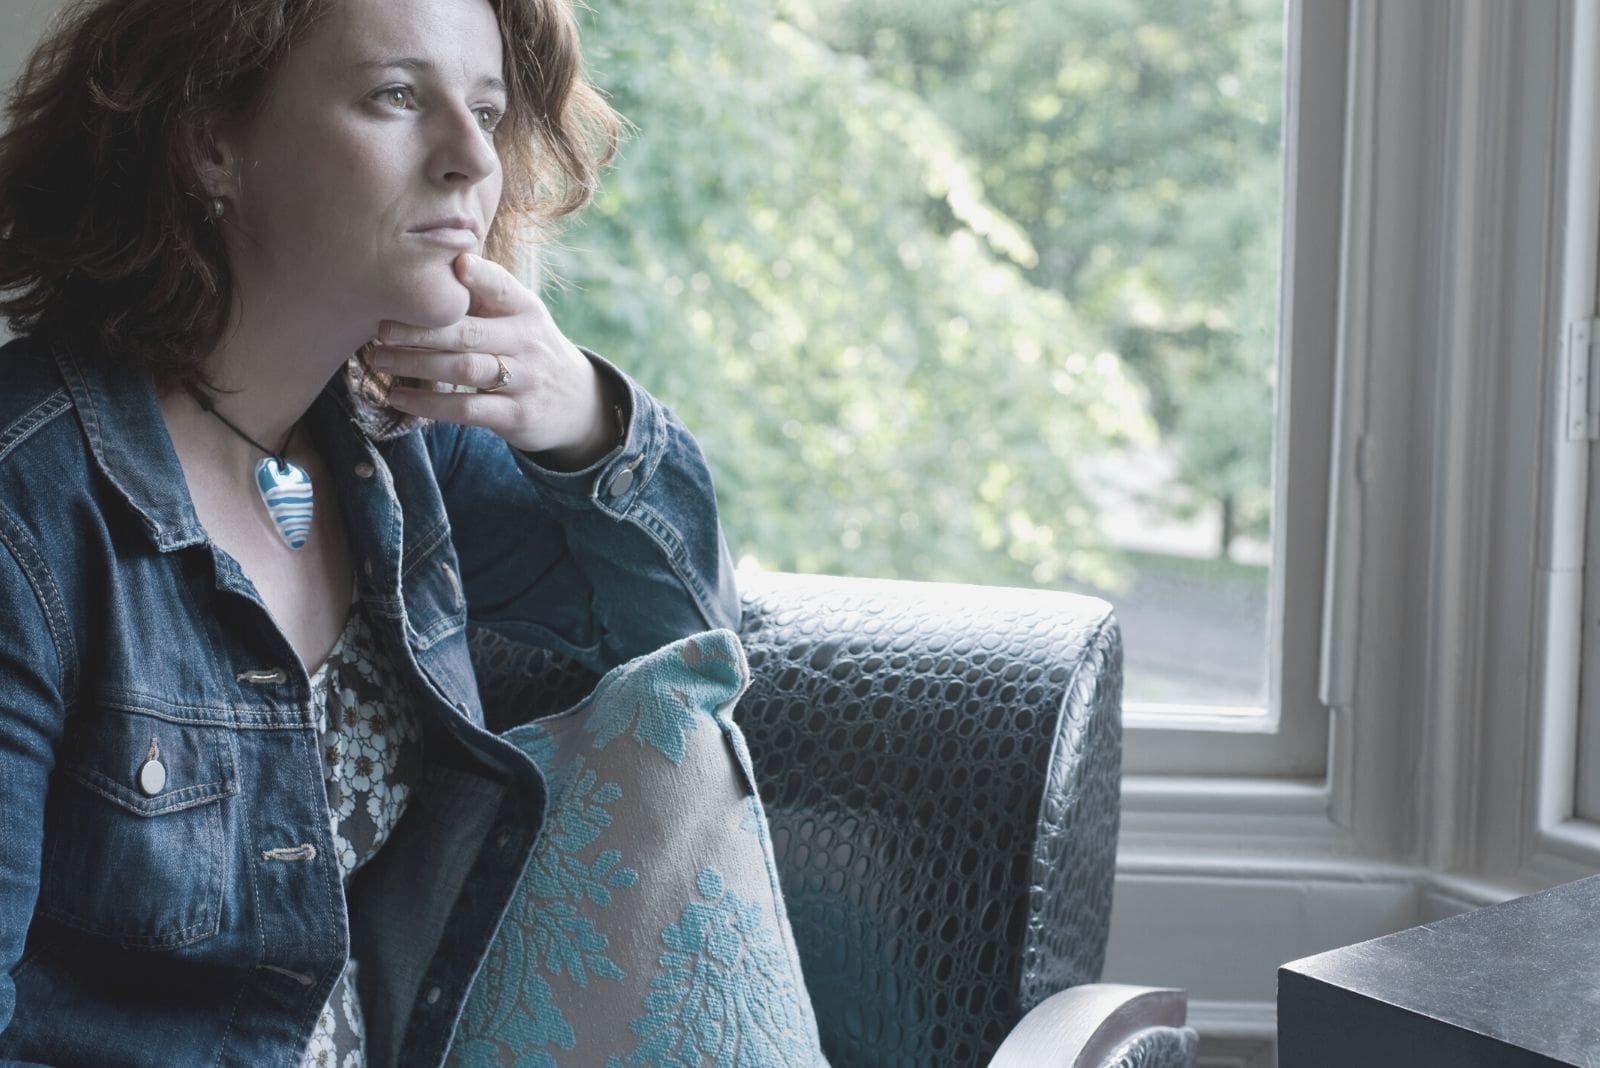 woman wearing denim jacket thoughtful and sitting near the windows